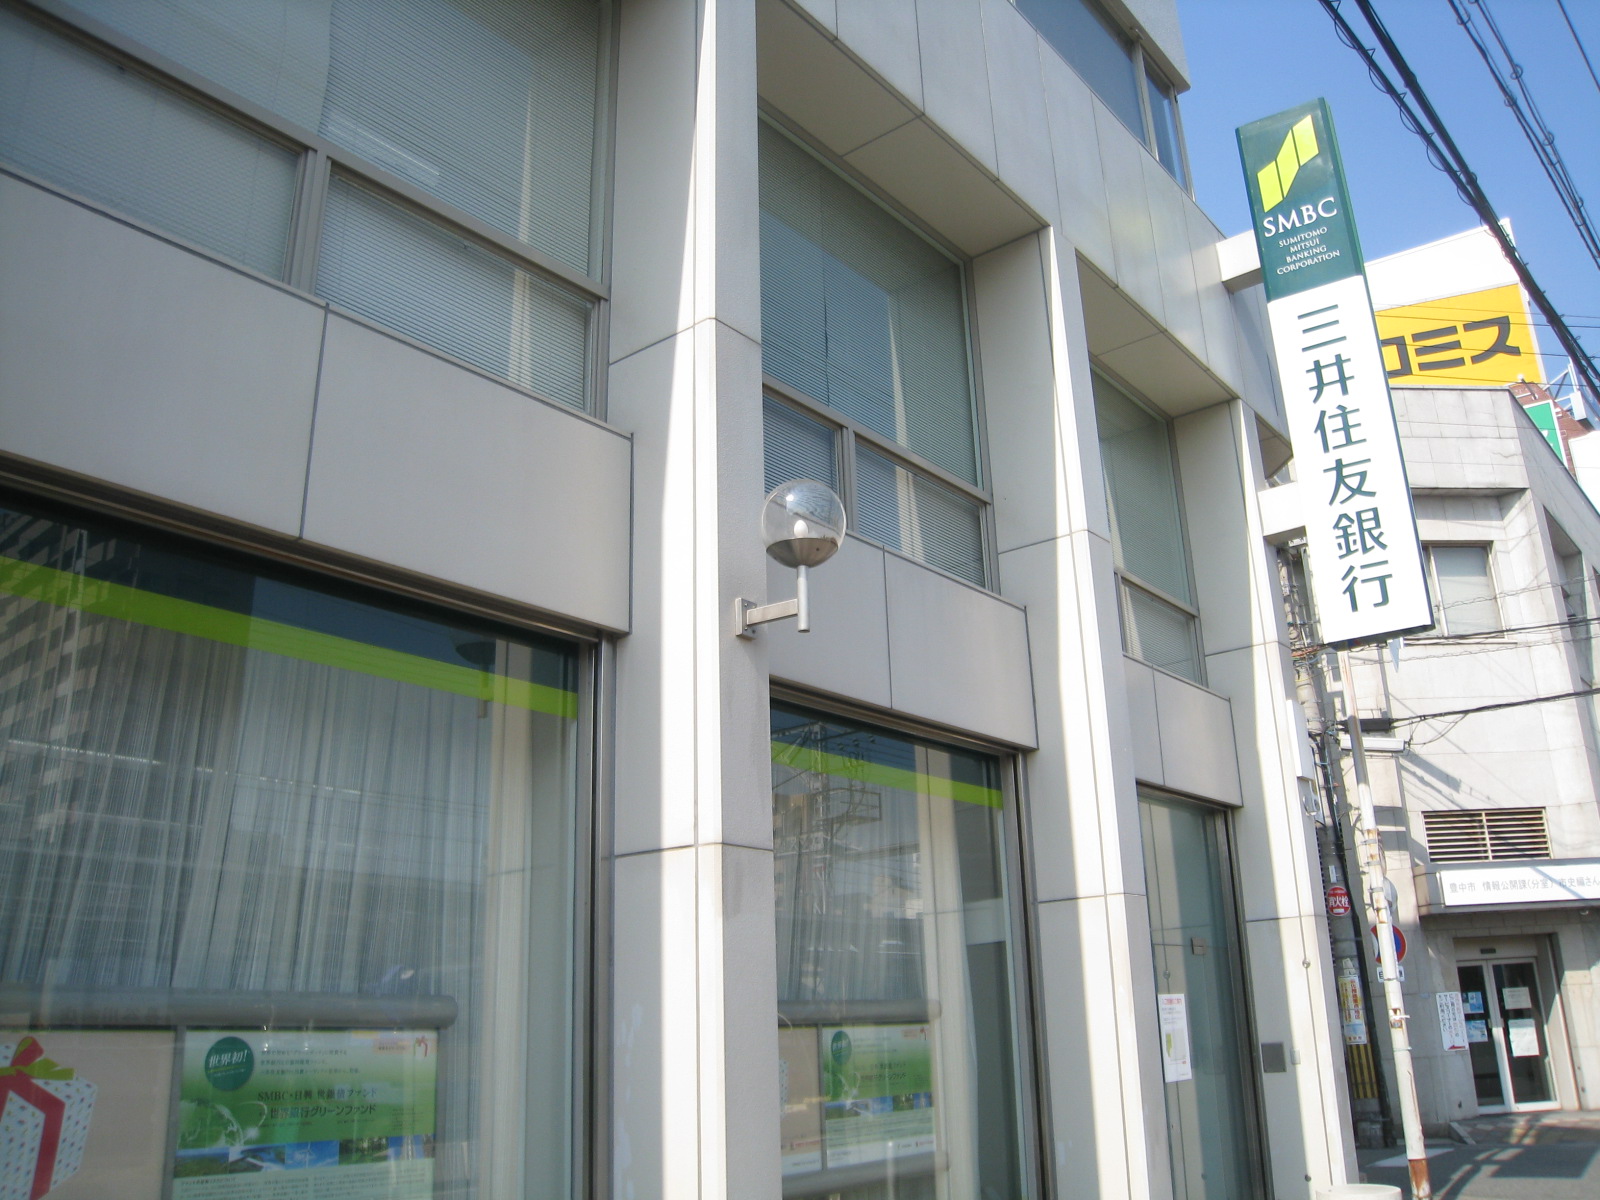 Bank. Sumitomo Mitsui Banking Corporation Shonai 489m to the branch (Bank)